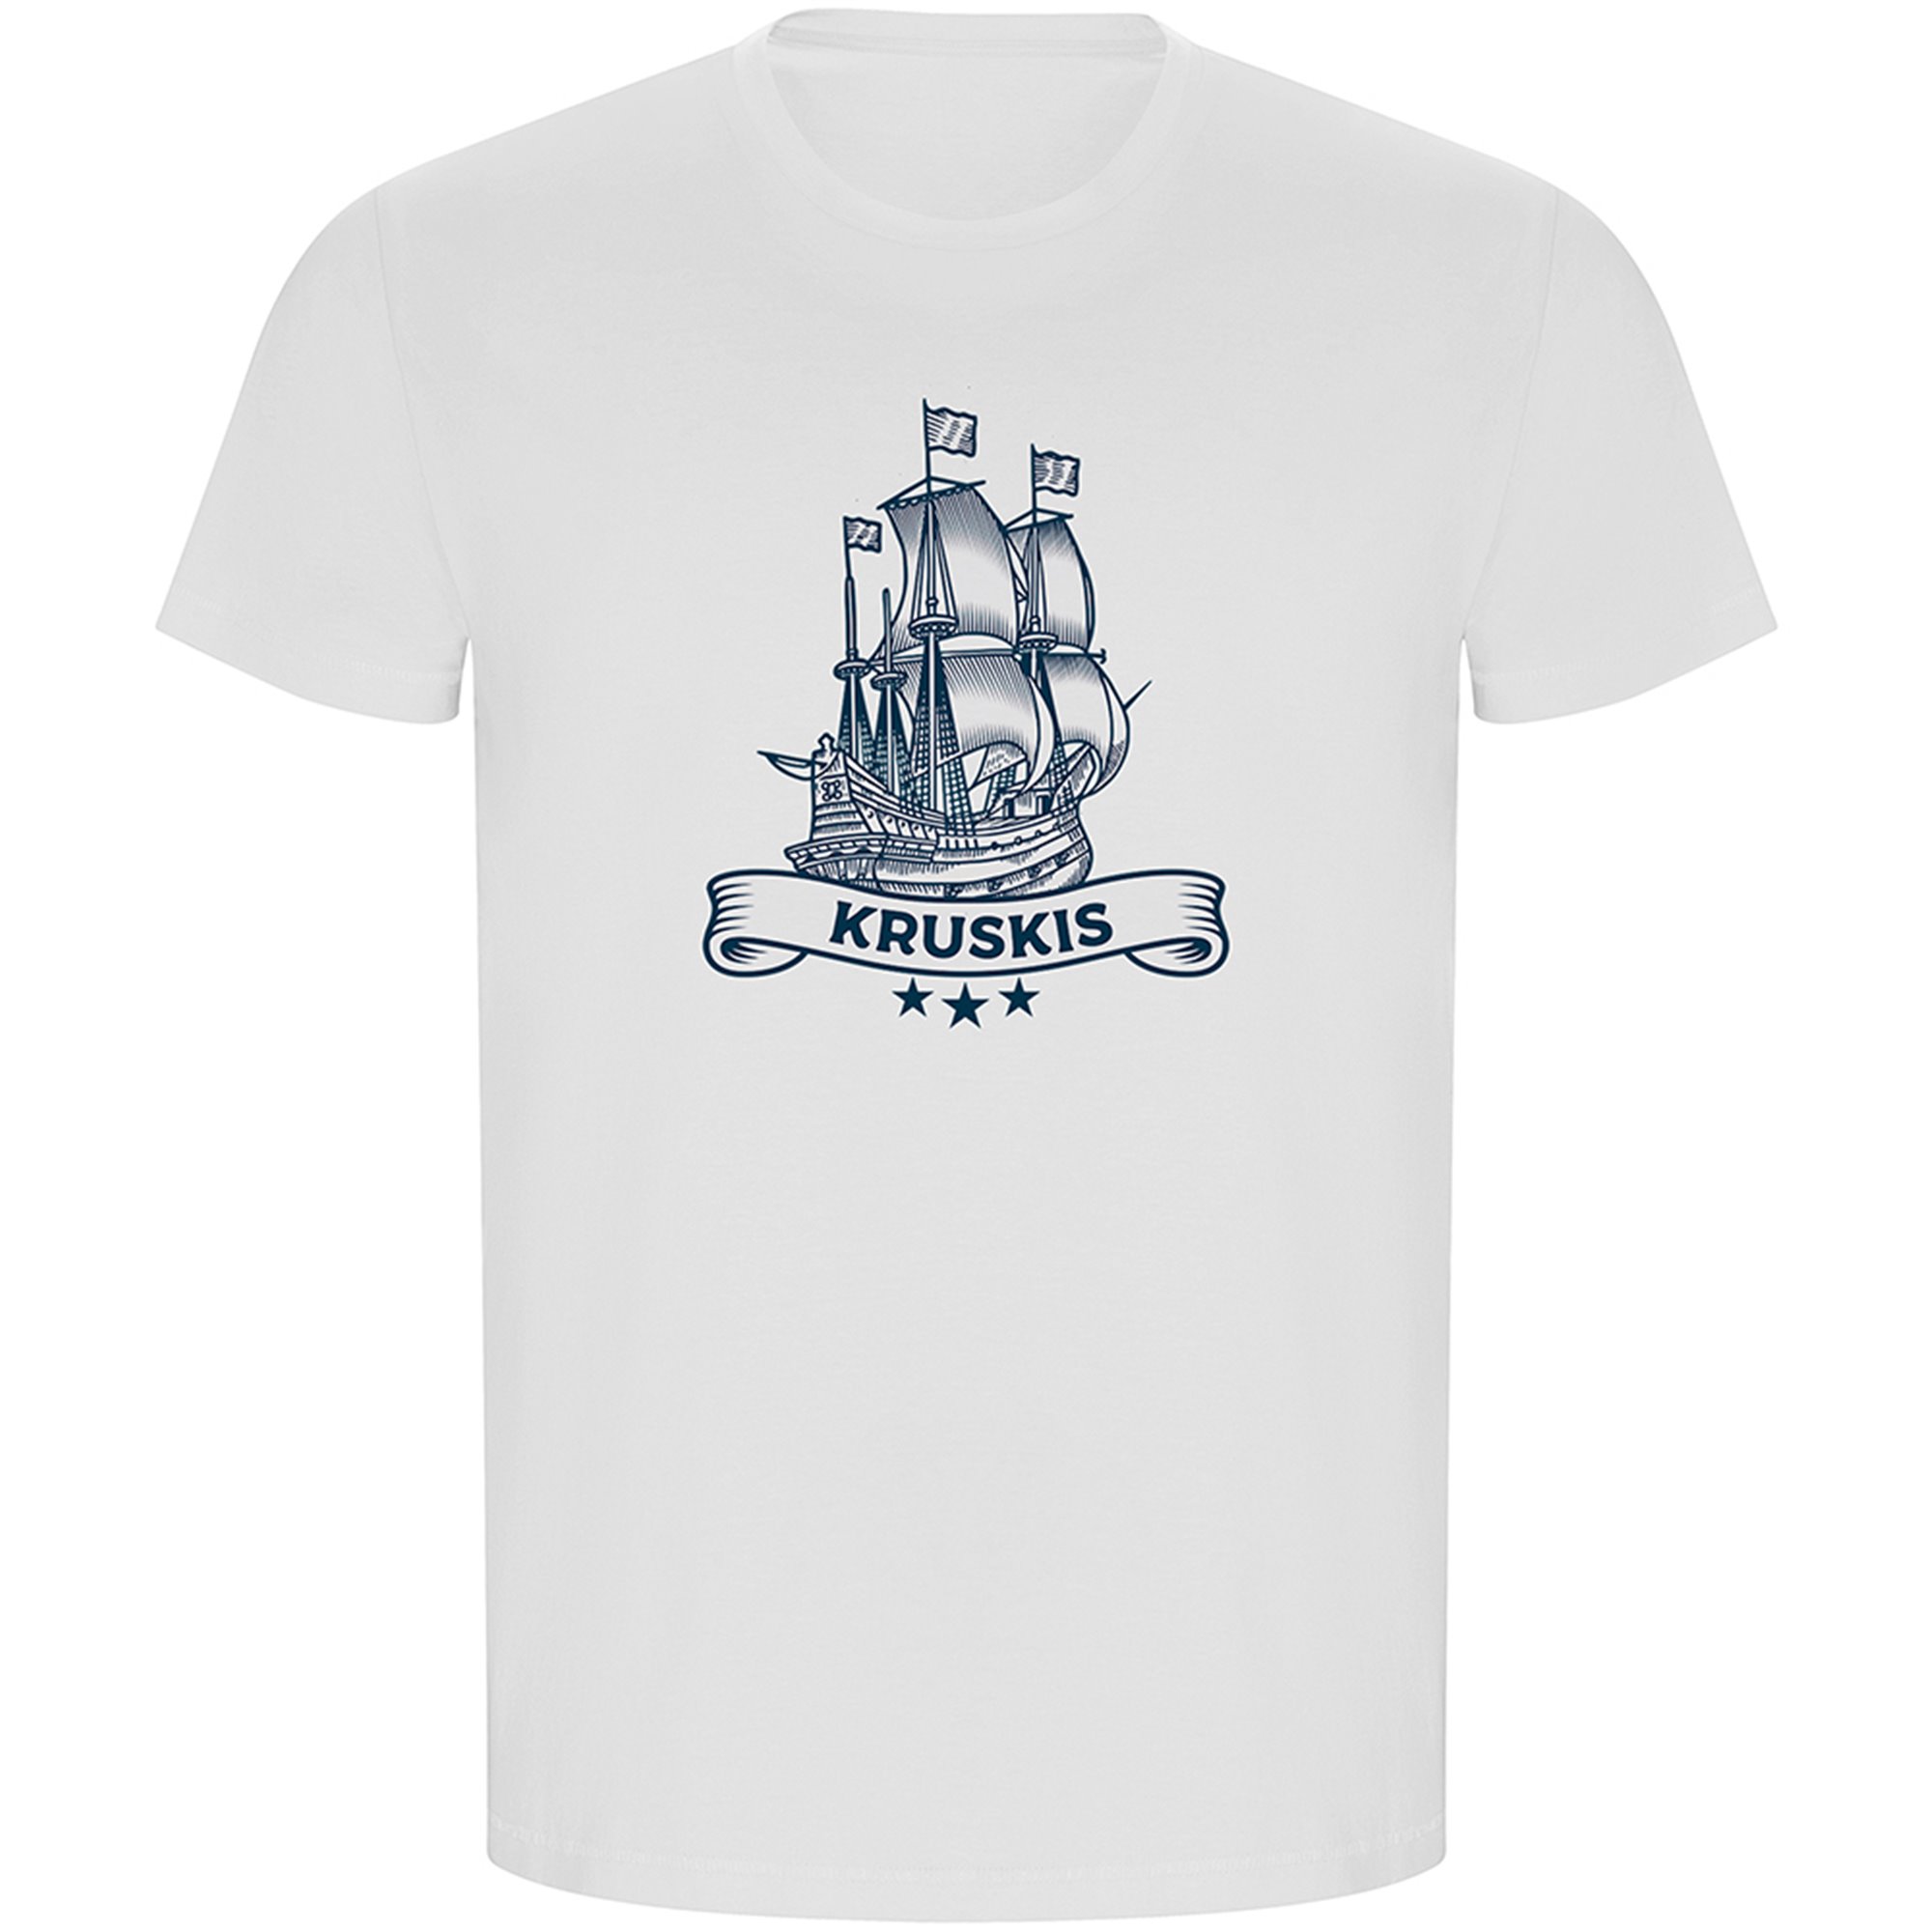 T Shirt ECO Nautical Ship Short Sleeves Man